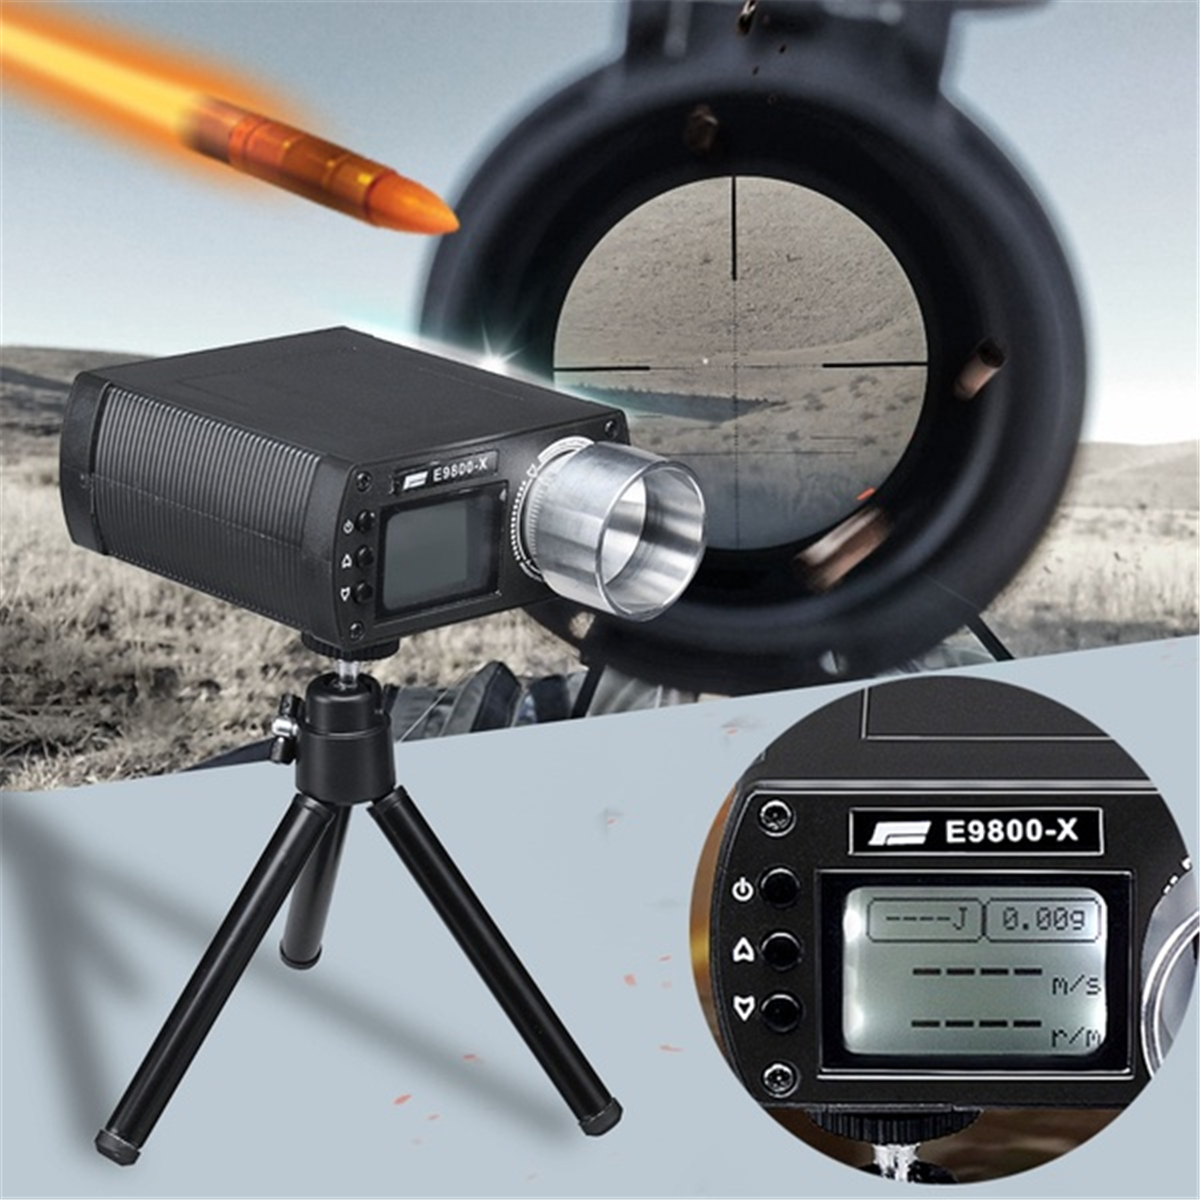 E9800-X Shooting Speed Tester High-Precision Shooting Chronograph LCD Screen 5